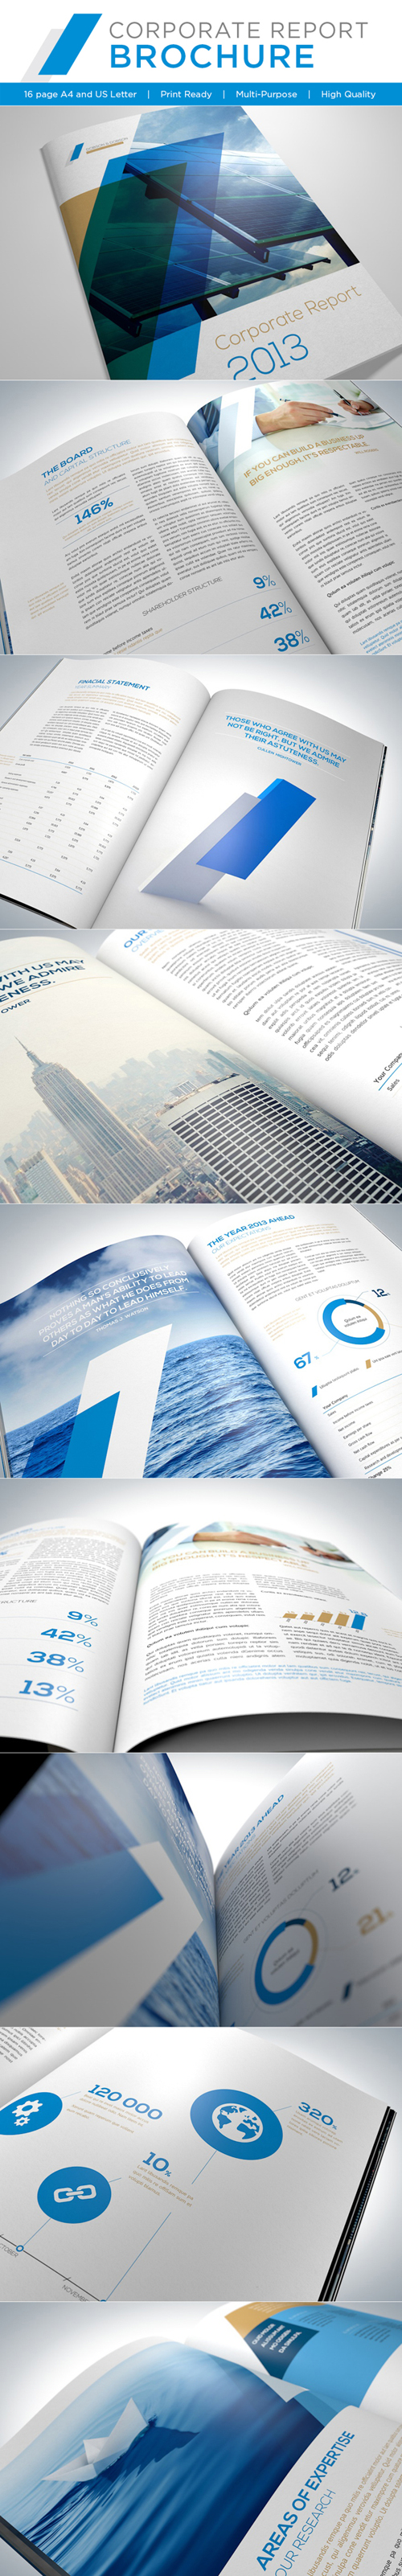 Corporate Report Brochure Design